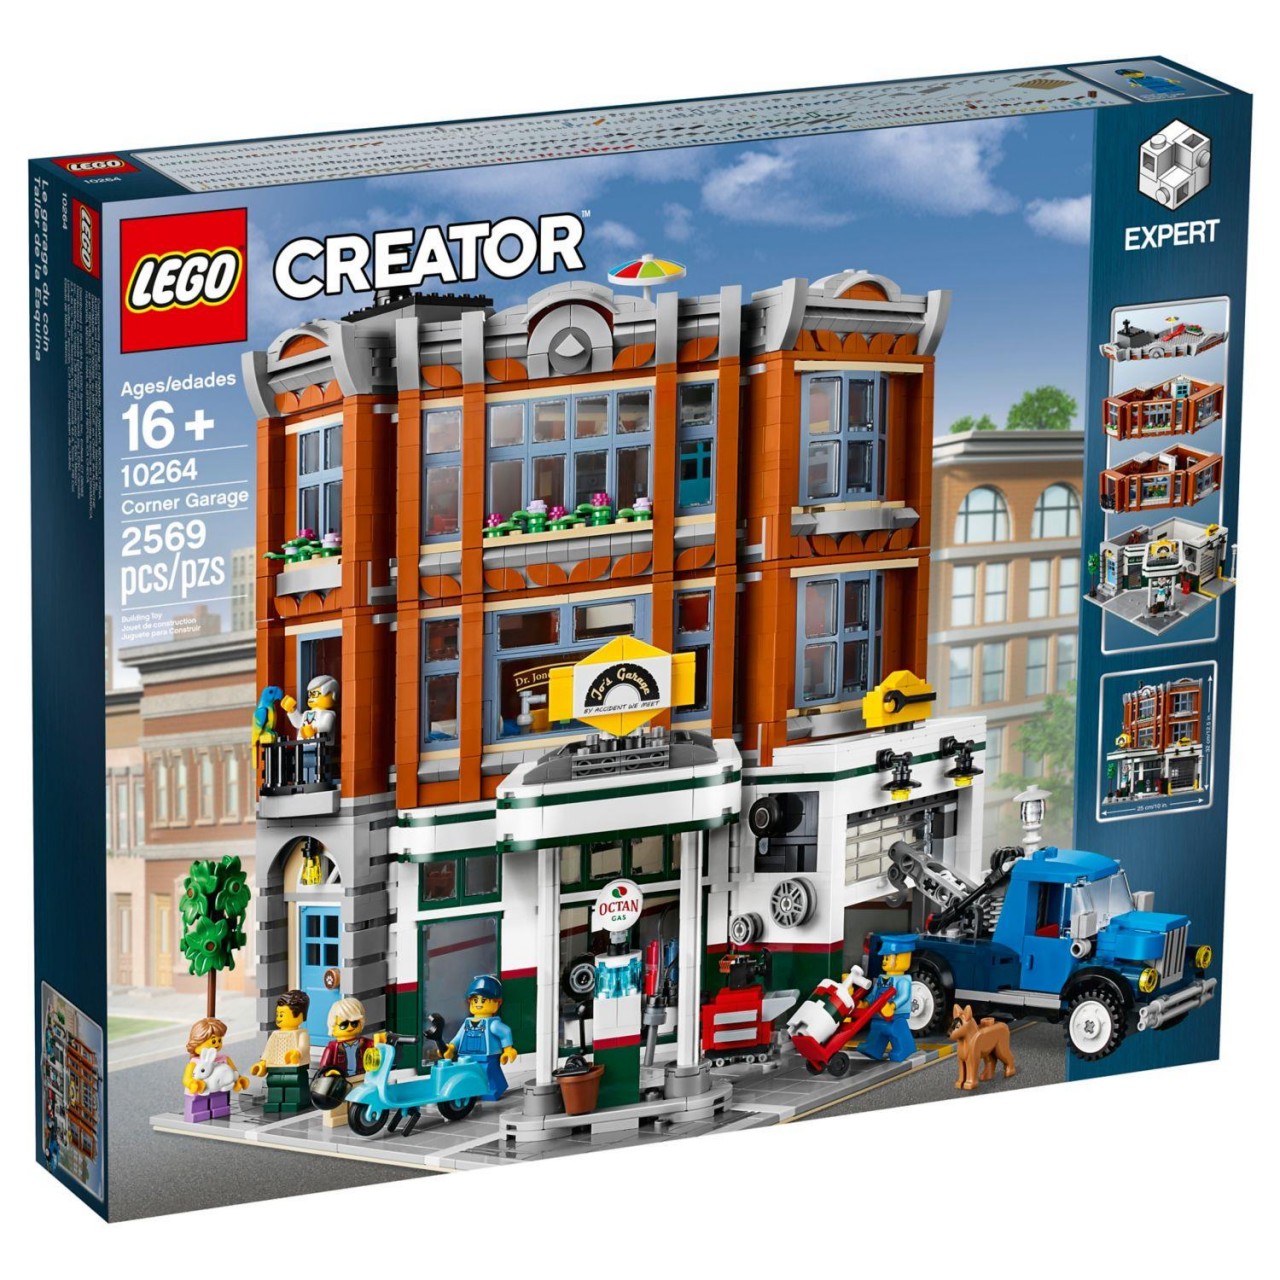 LEGO CREATOR EXPERT 10264 Eckgarage